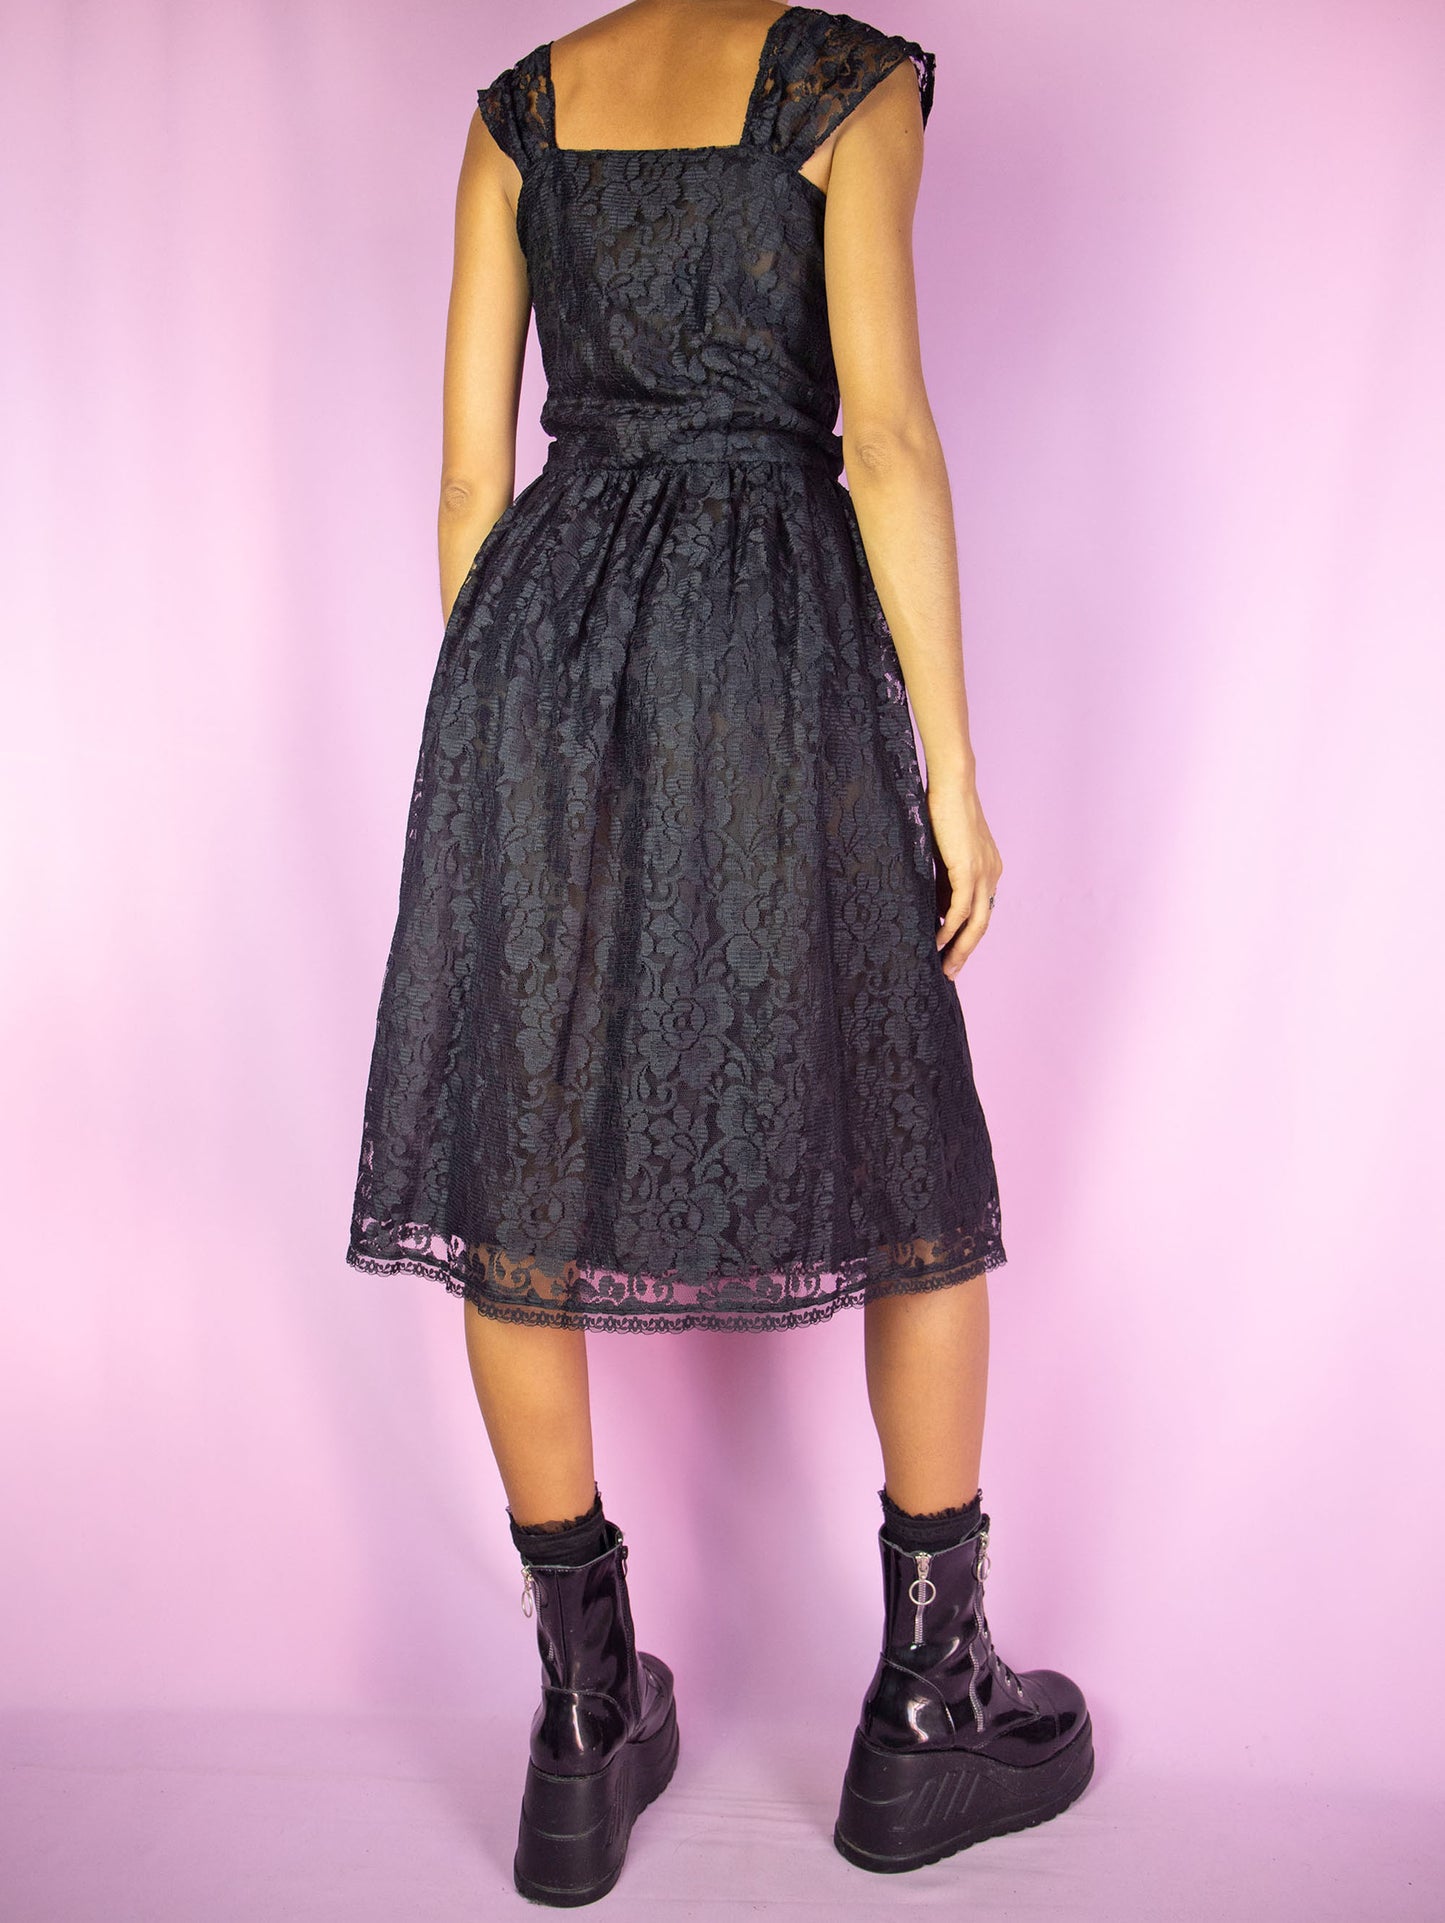 Vintage 90s Black Lace Midi Dress - S